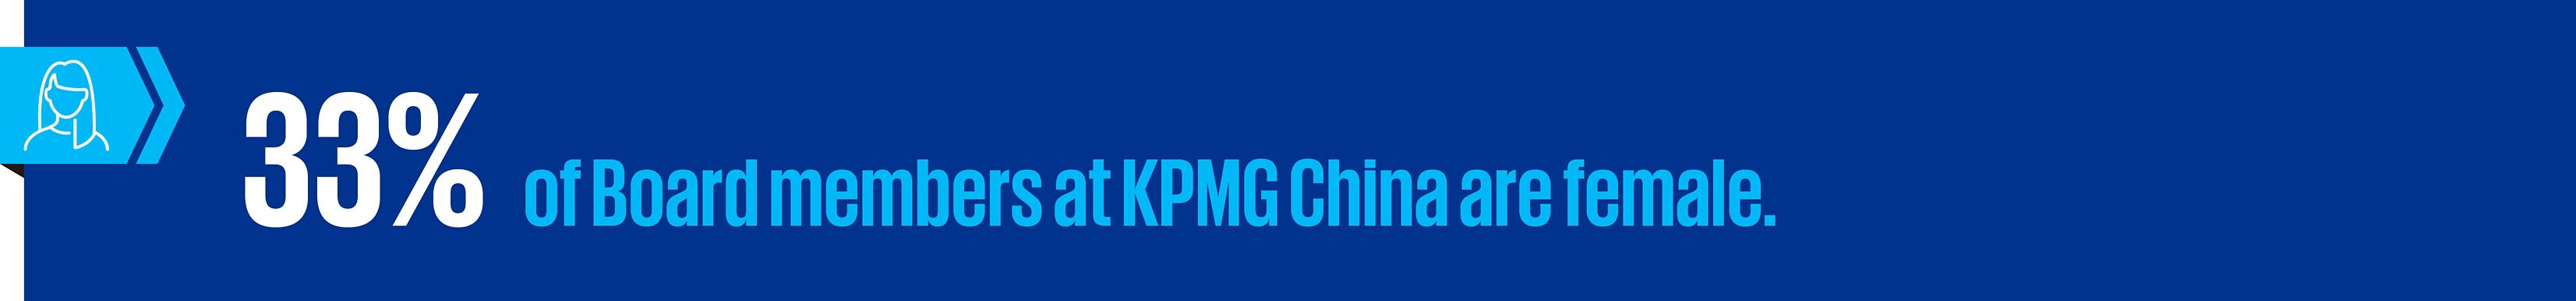 Female board members at KPMG China